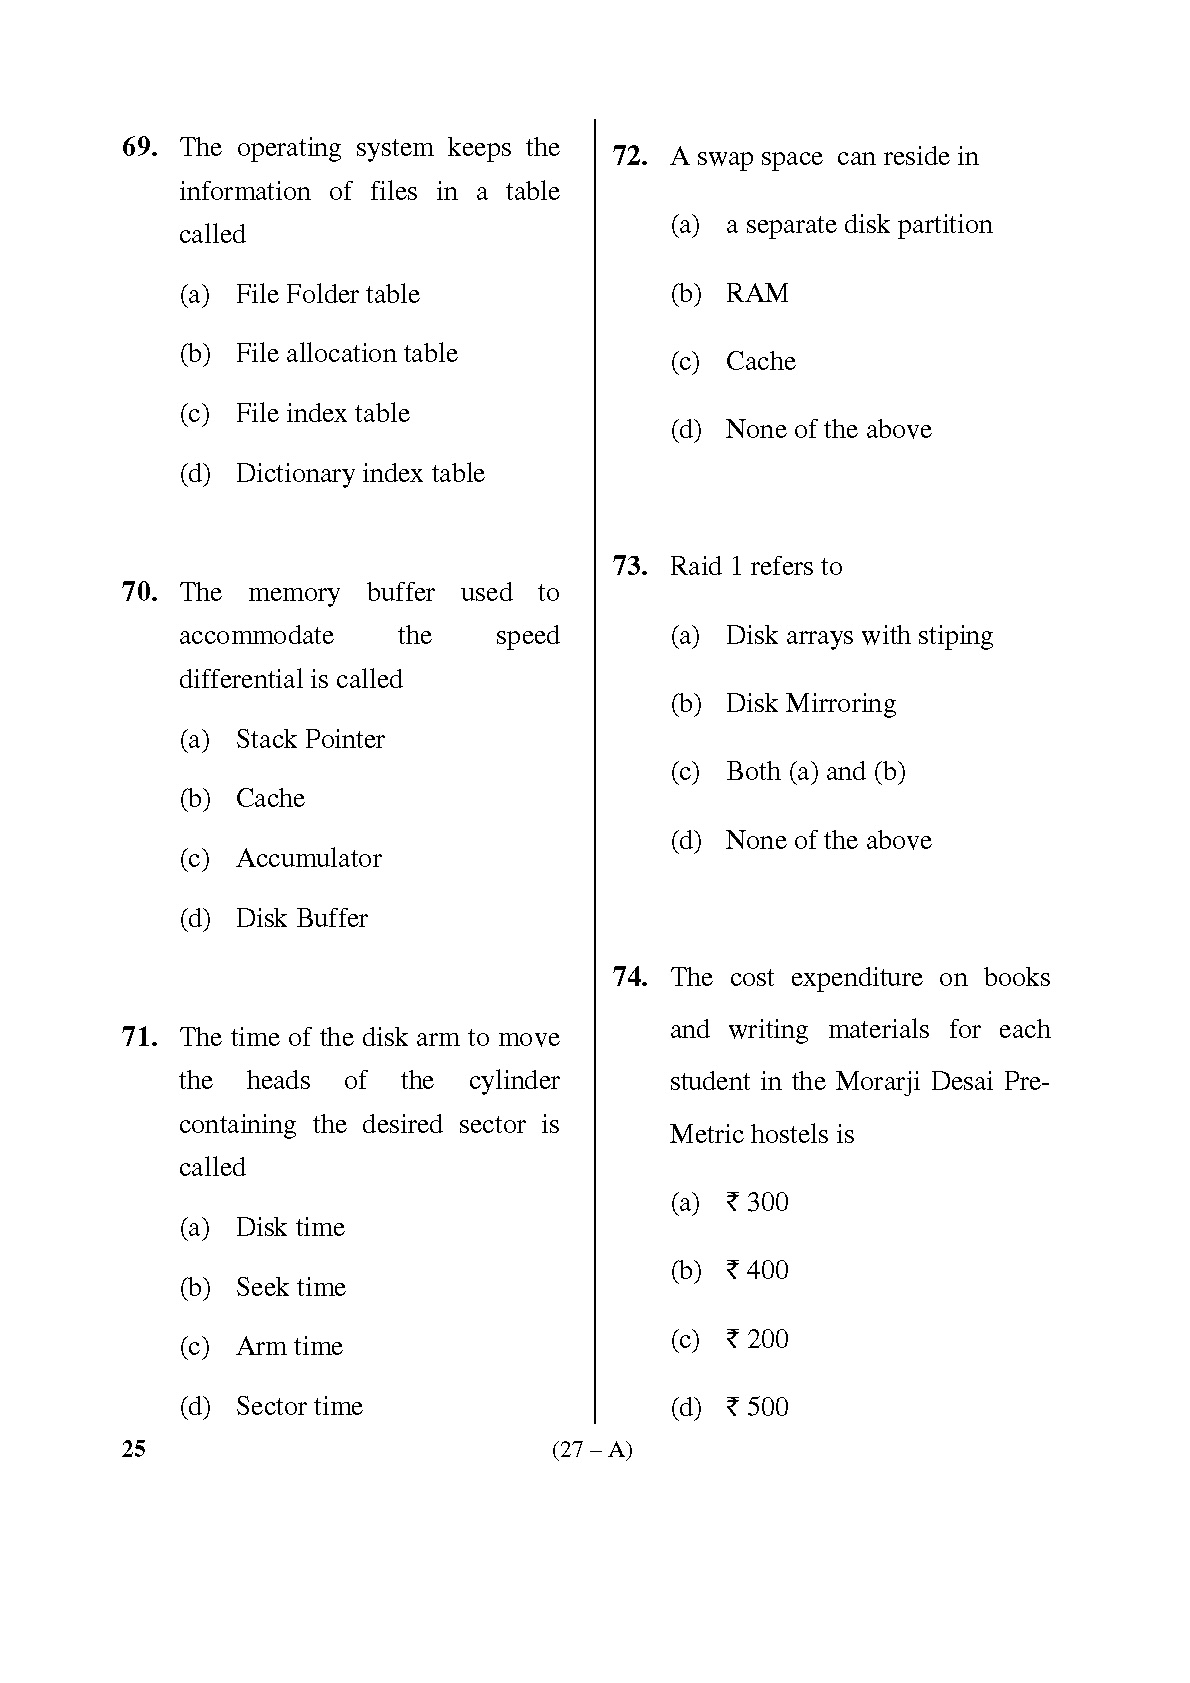 Karnataka PSC Computer Science Teachers Exam Sample Question Paper Subject code 25 27